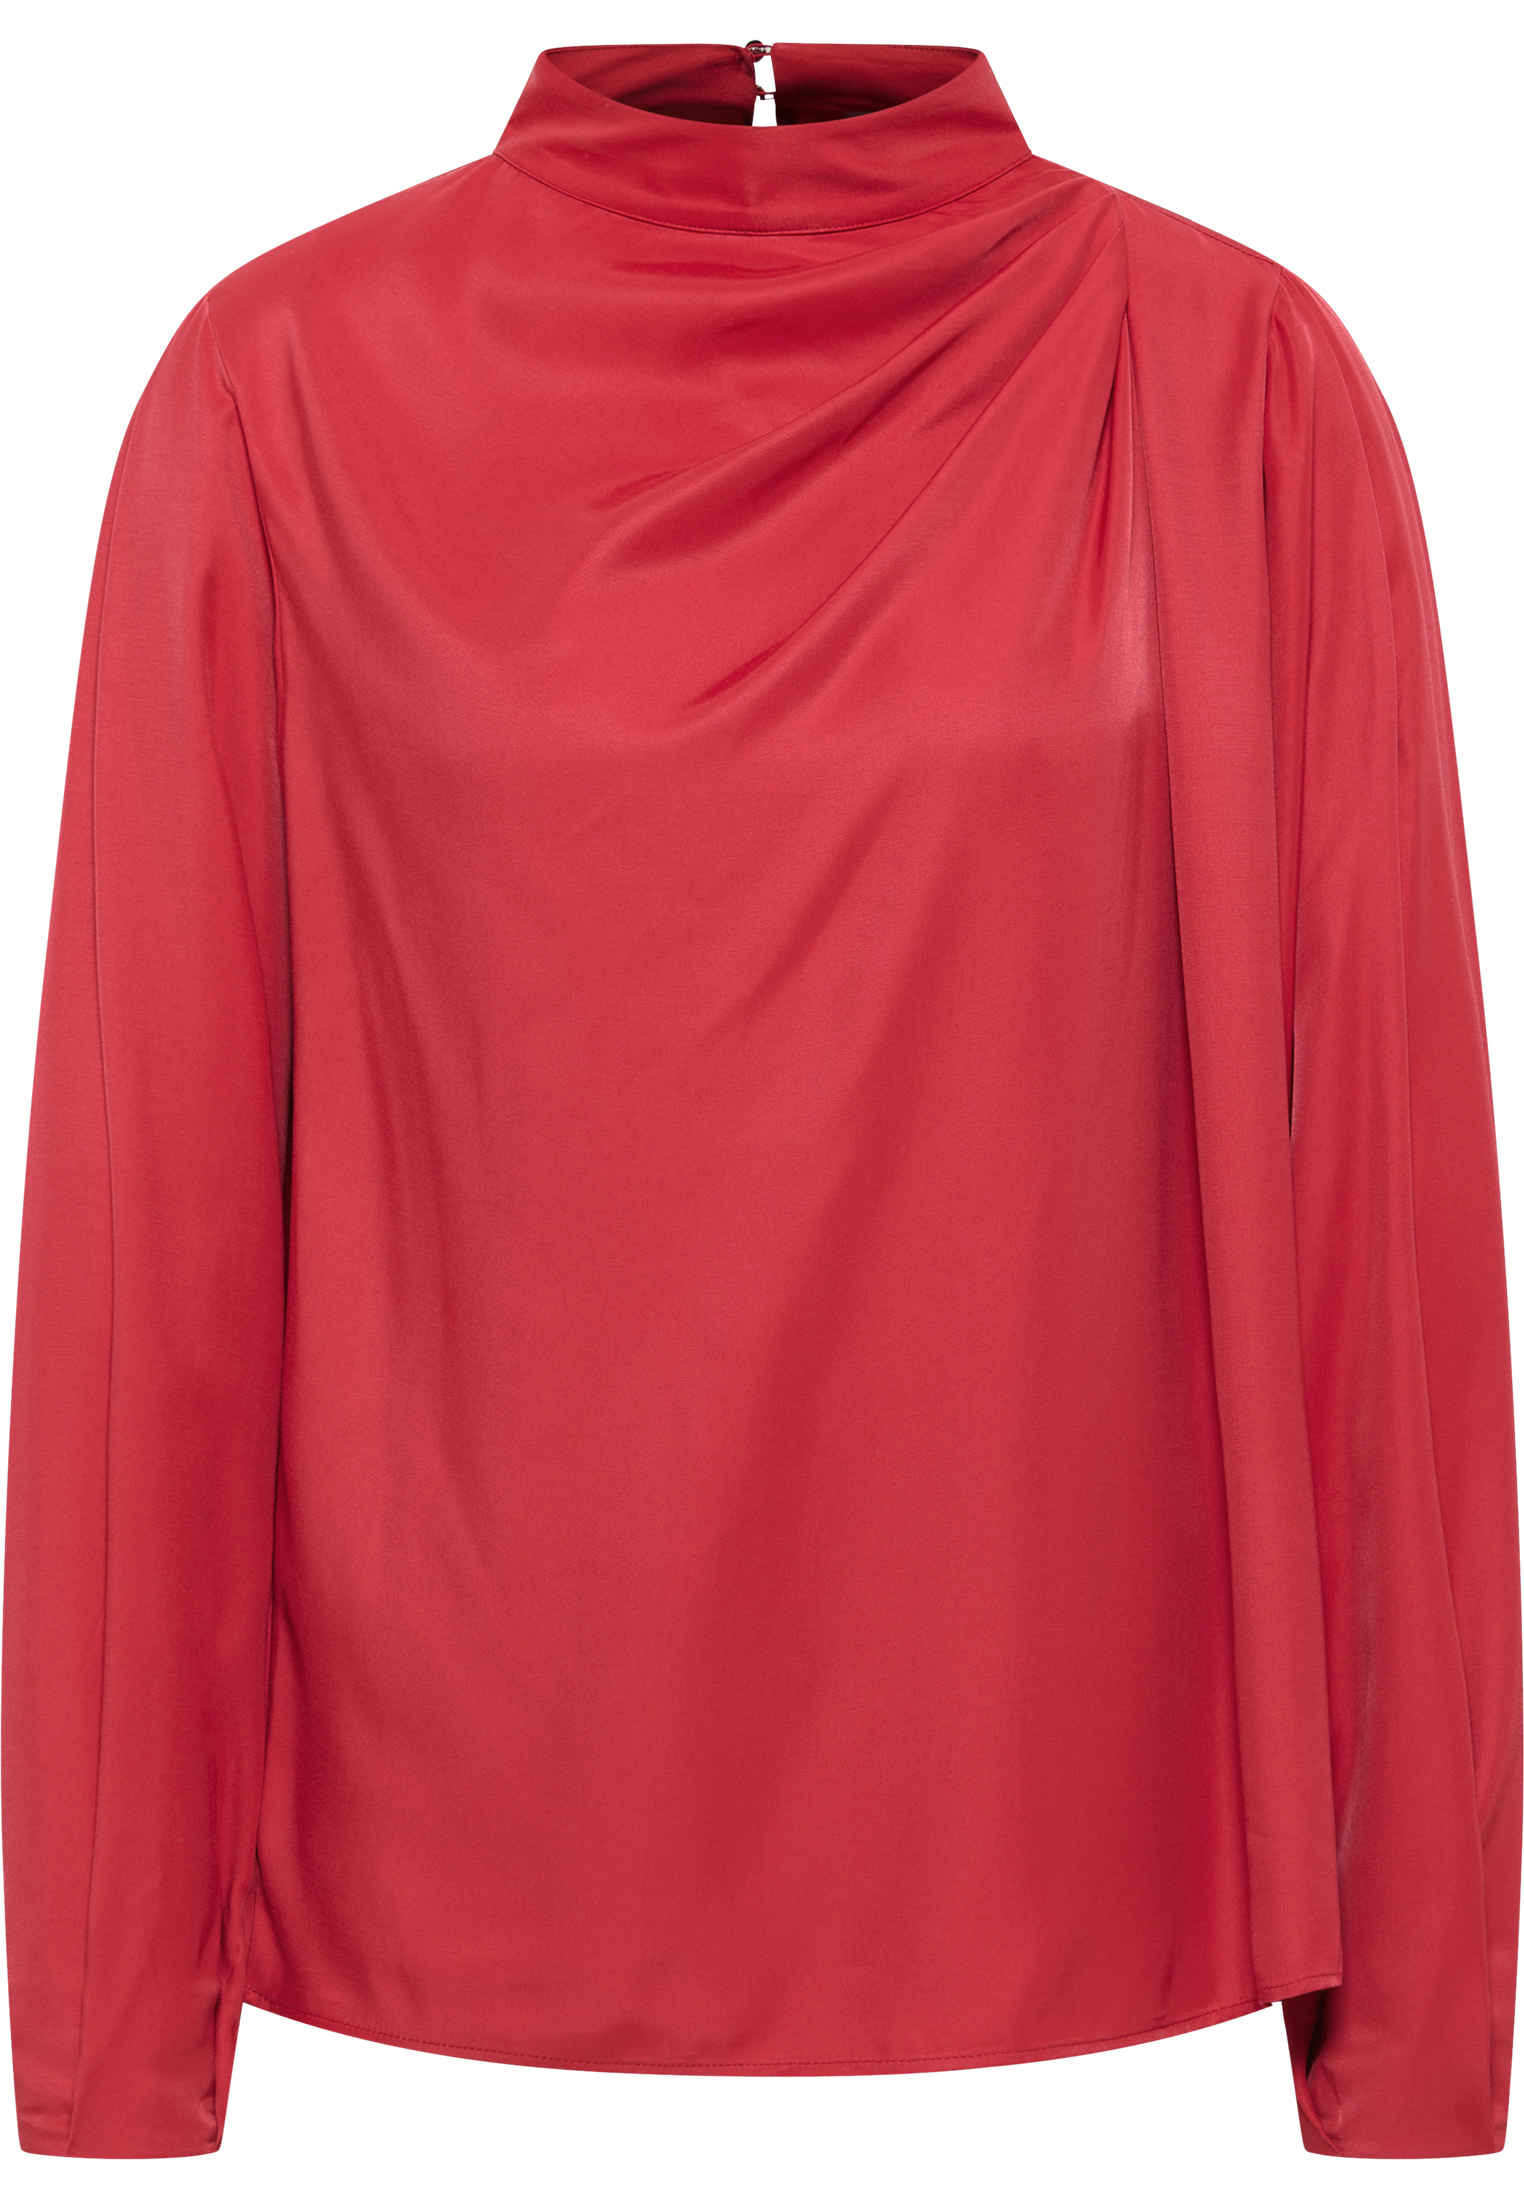 Viscose Shirt Bluse in rot unifarben | rot | Langarm | 42 |  2BL04288-05-01-42-1/1